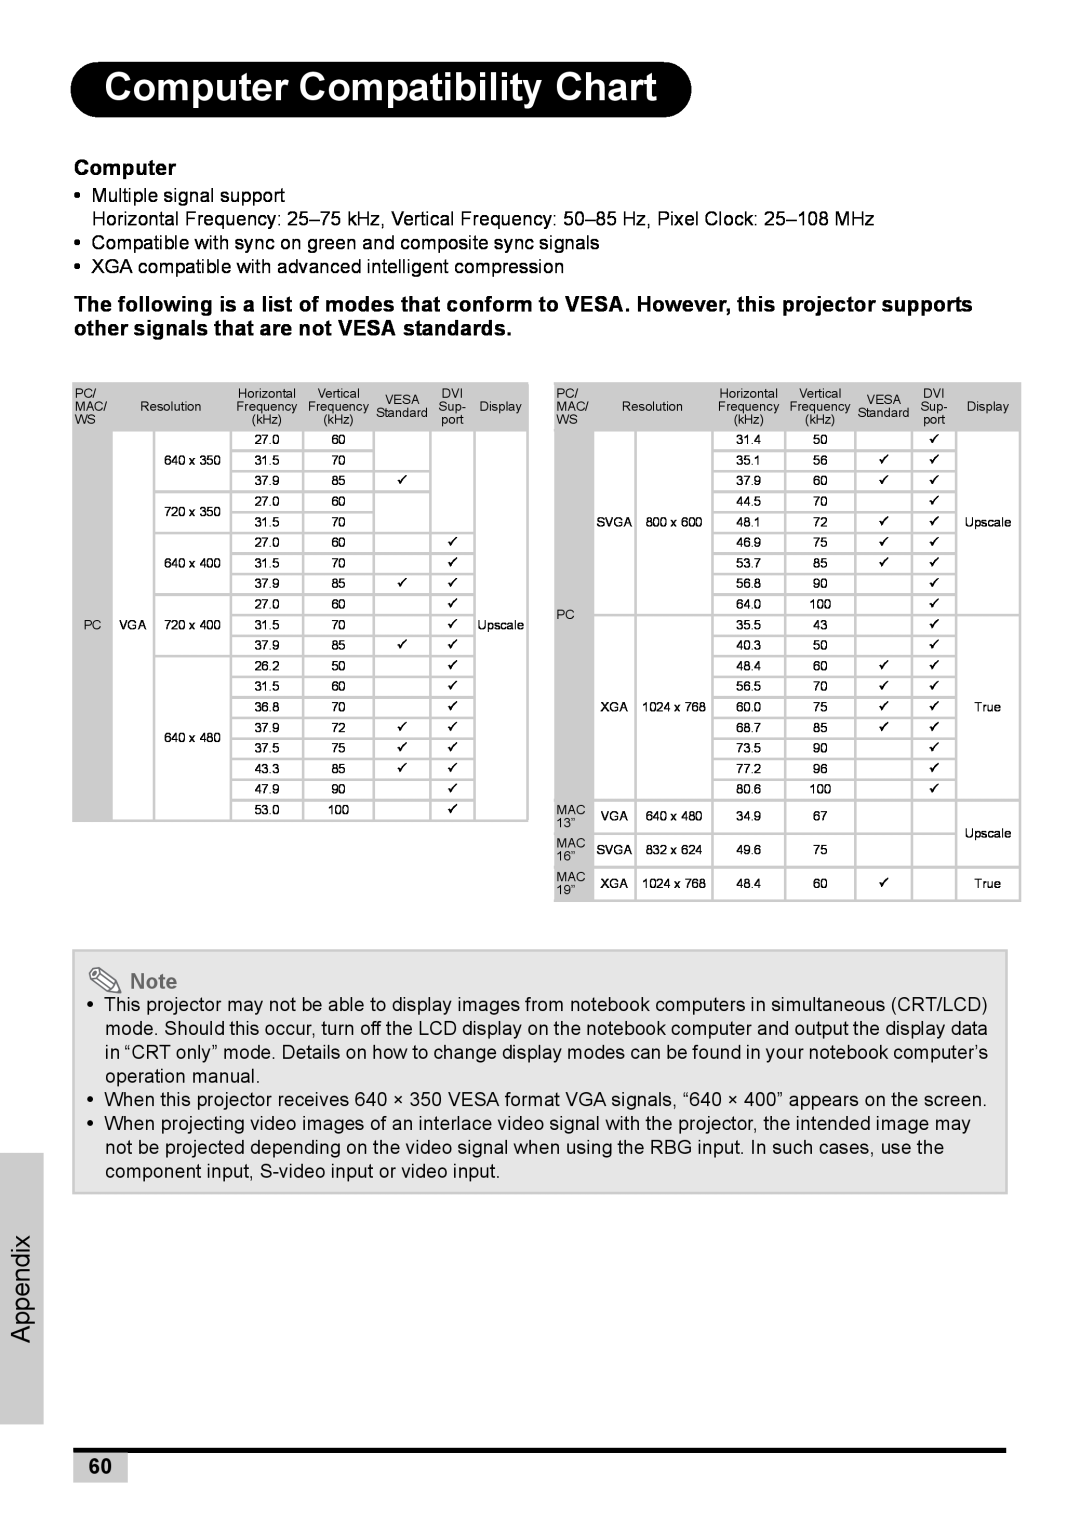 BOXLIGHT PREMIERE 30HD manual Computer Compatibility Chart, Appendix 